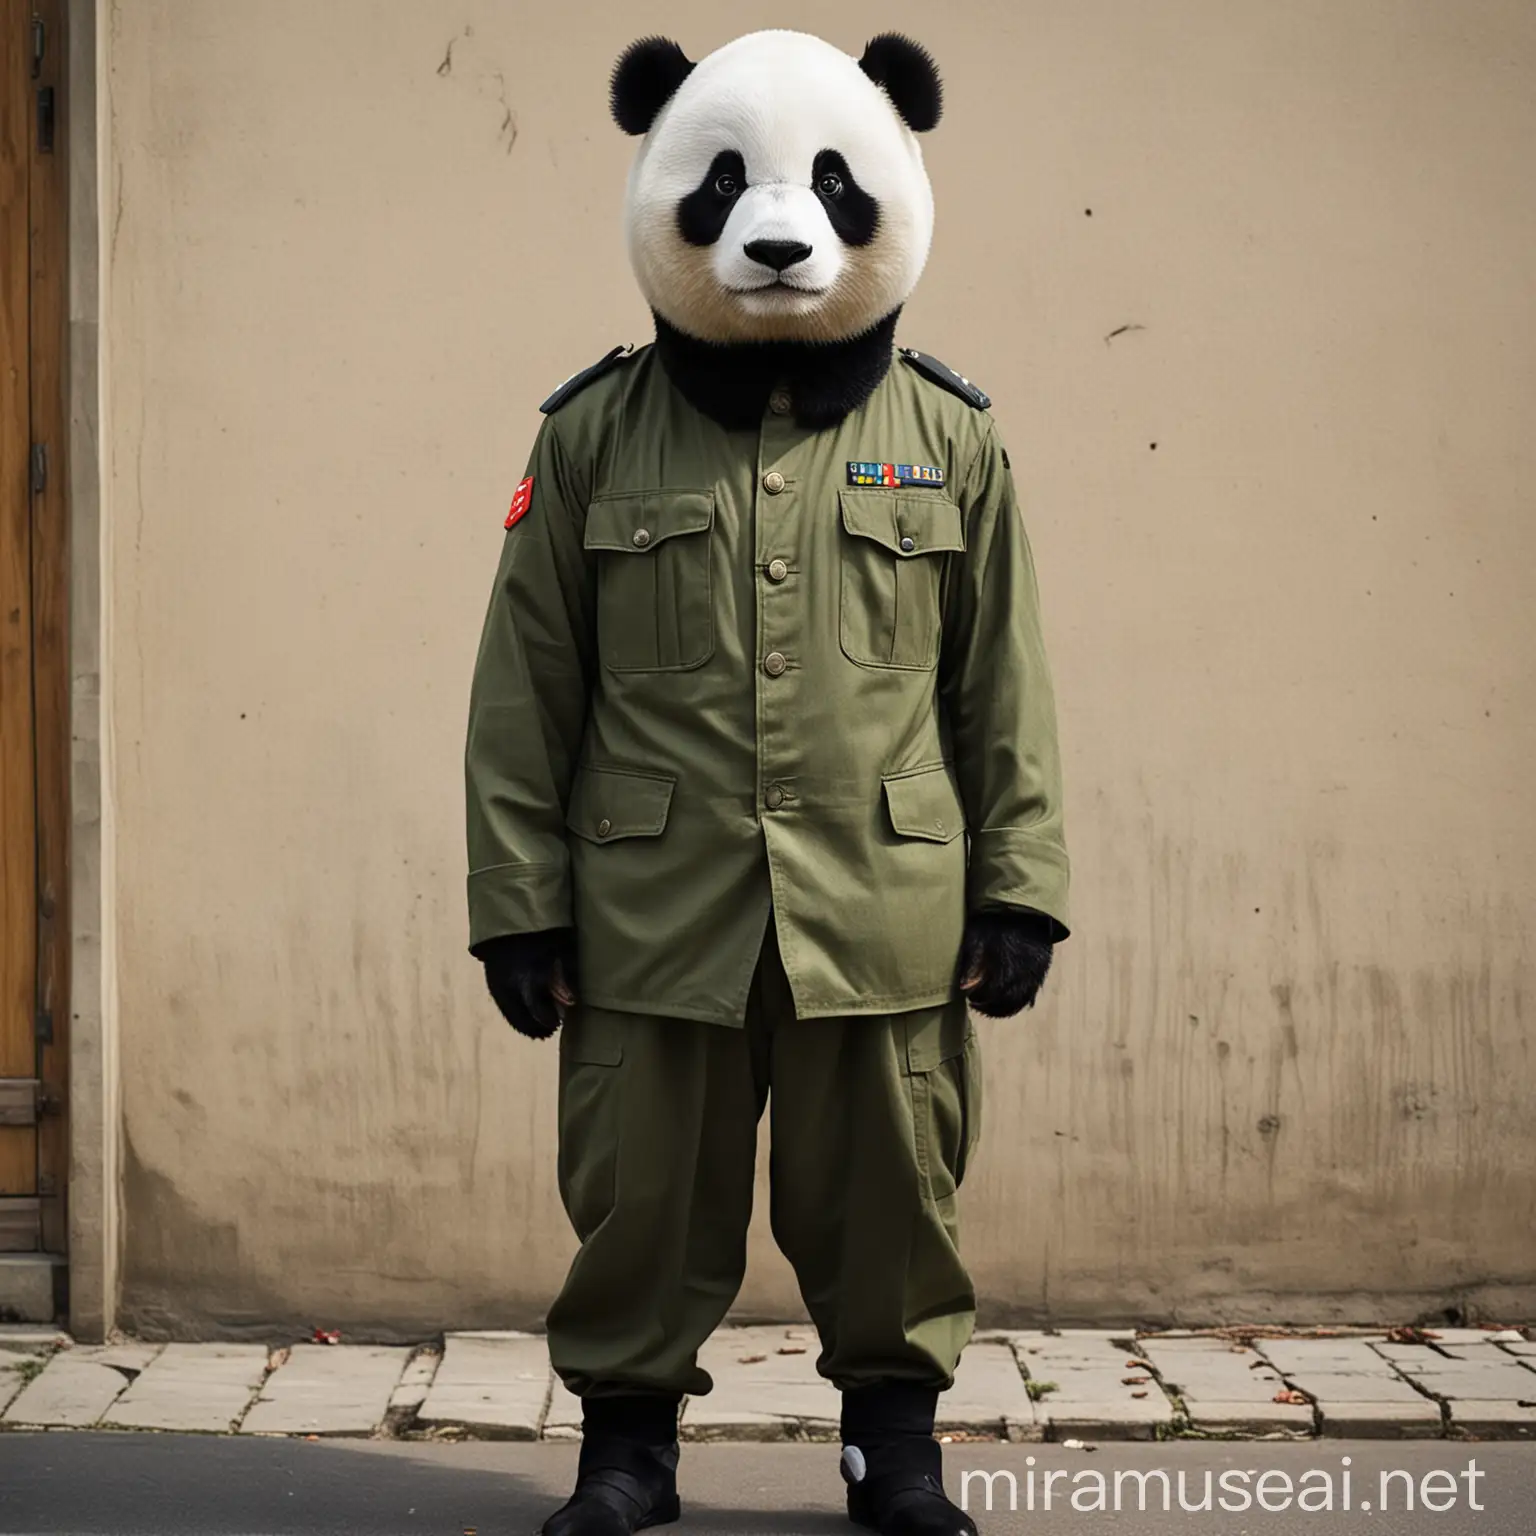 Panda Person in Military Uniforms